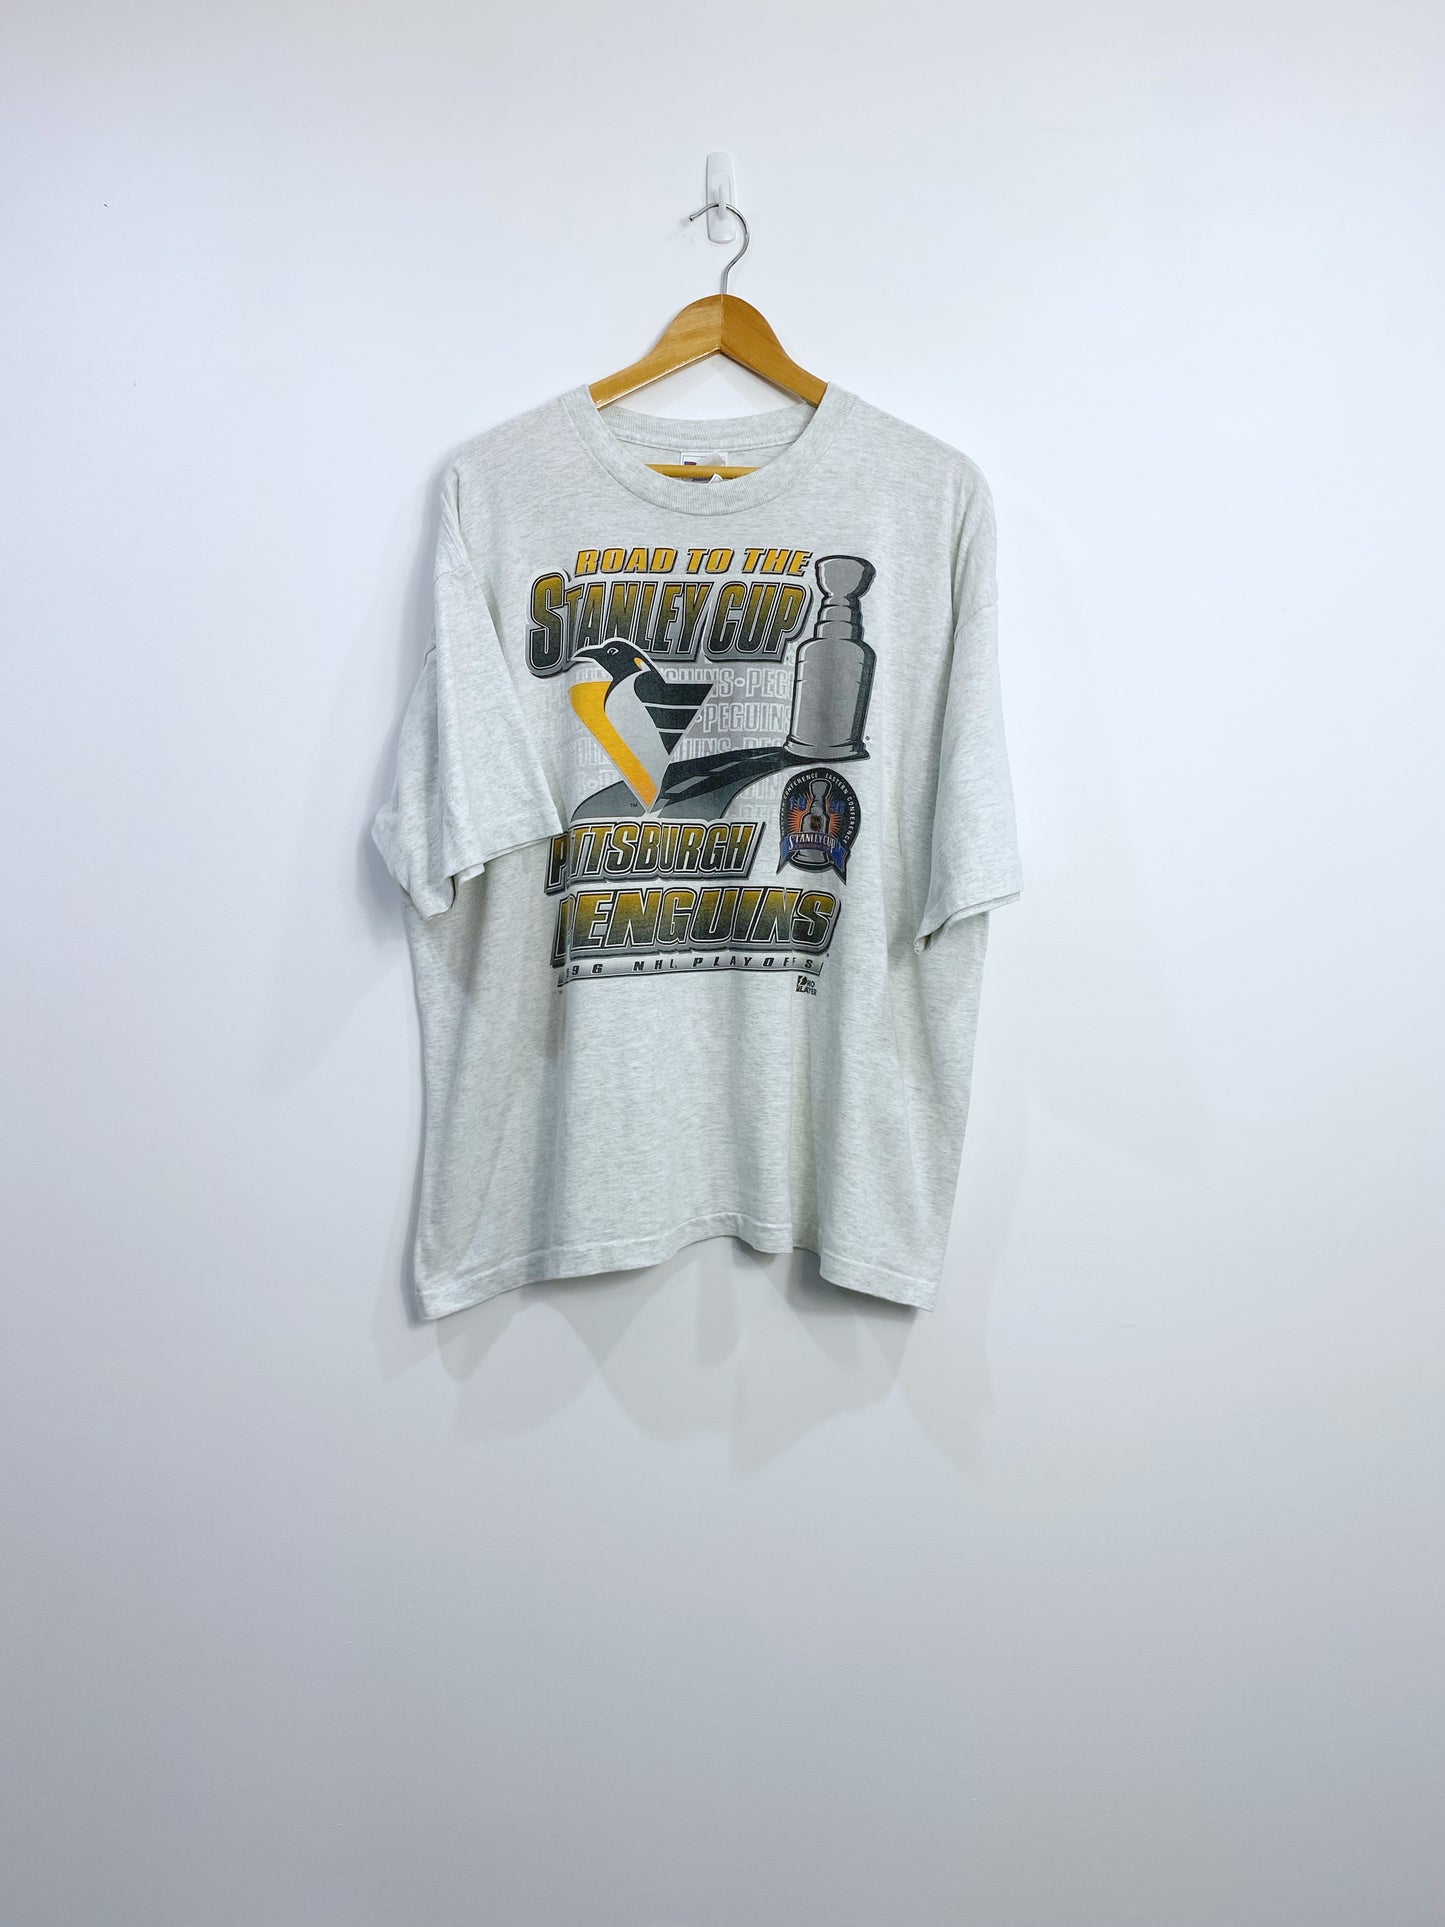 Vintage 1996 Pittsburgh Penguins T-shirt XL